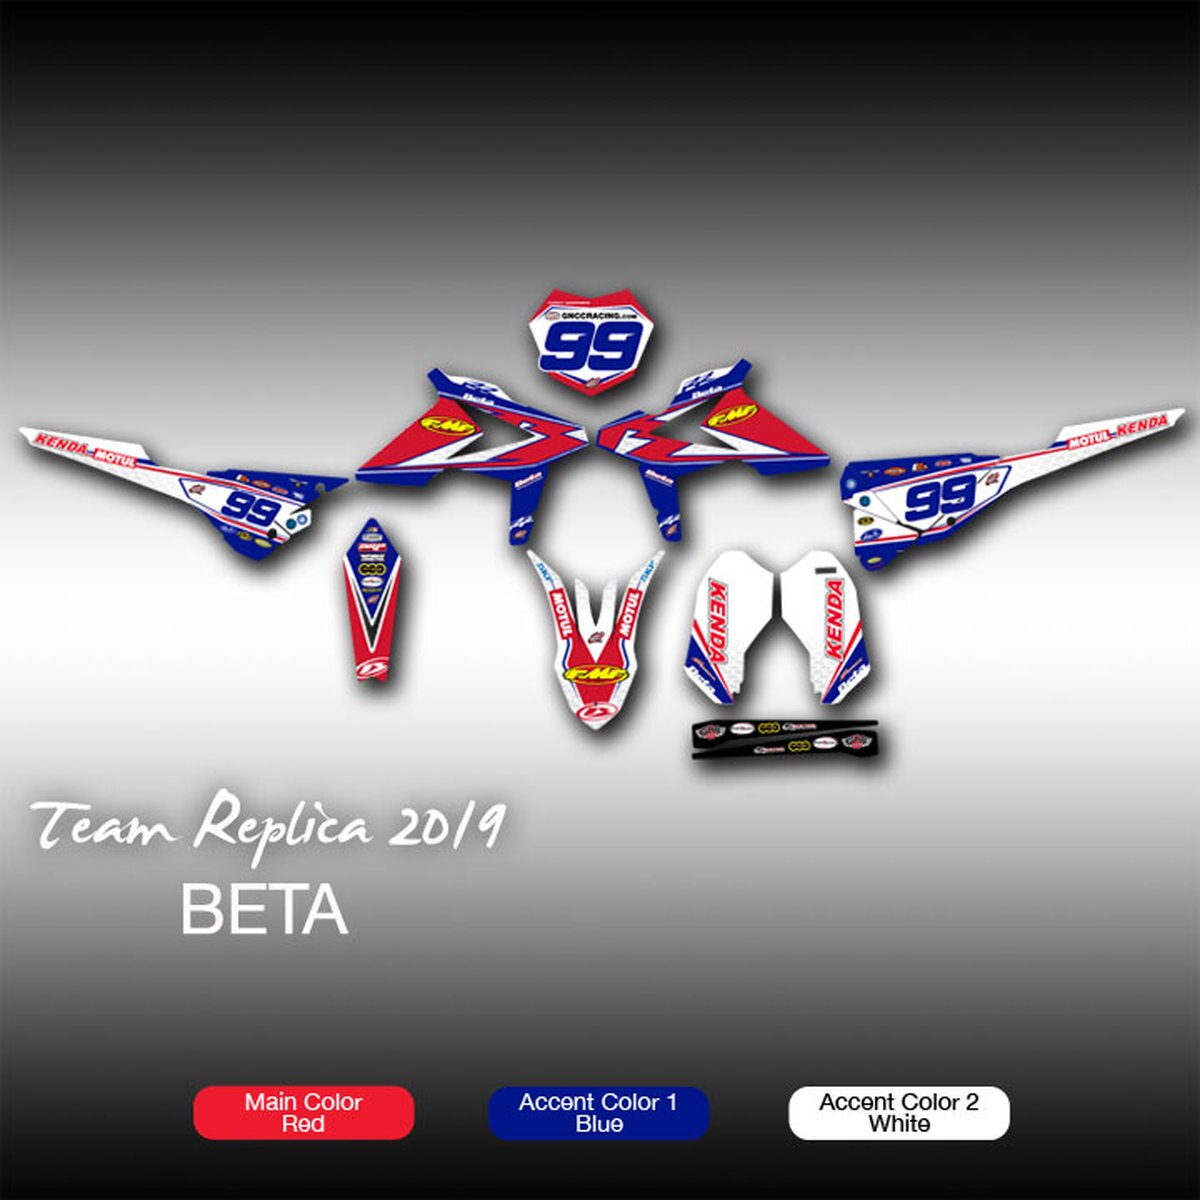 Main image of 2019 Beta Factory Racing Custom Graphics Set